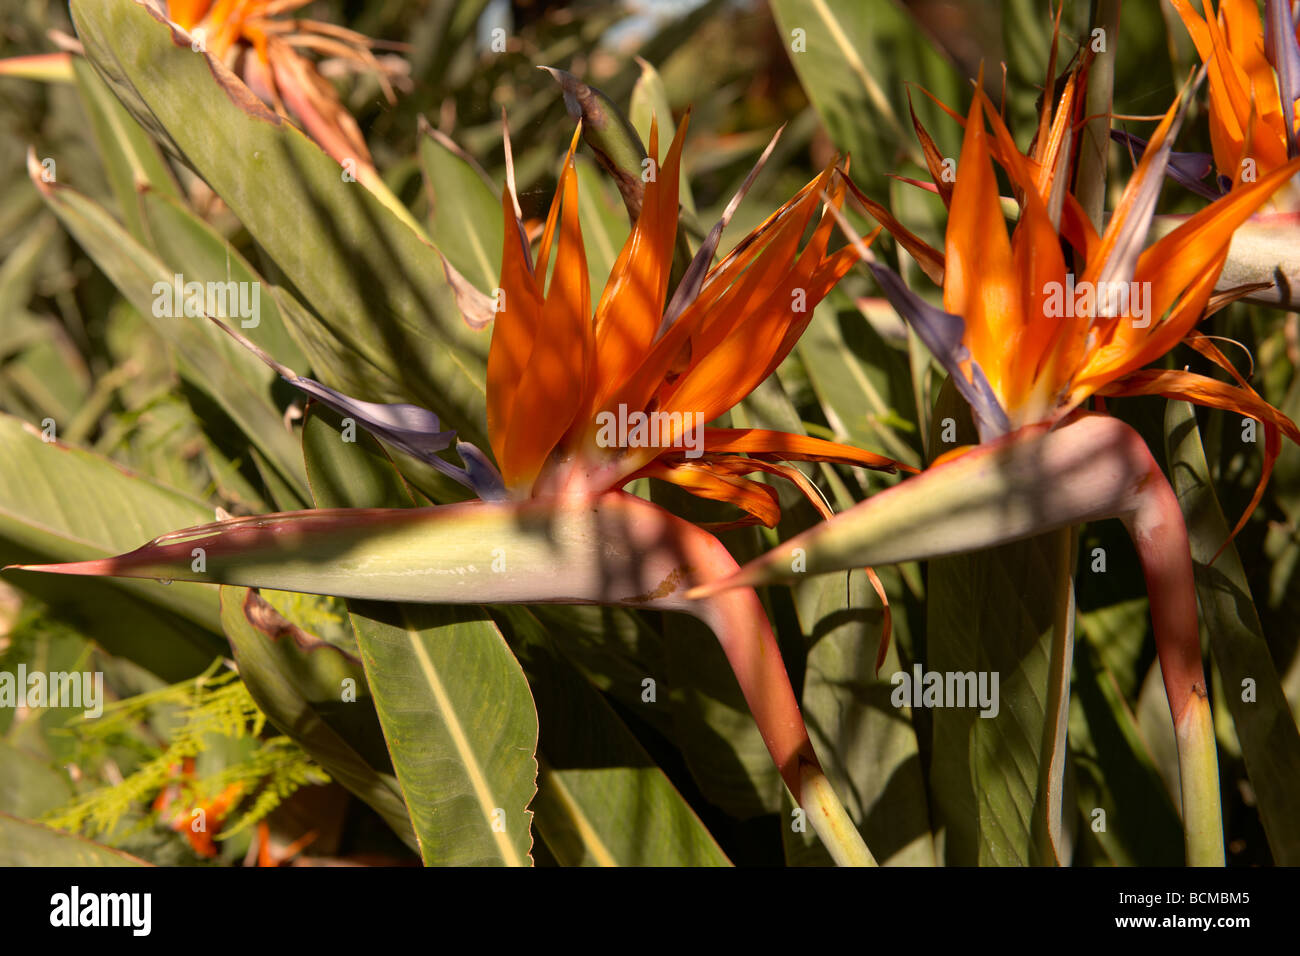 Bird of Paradise Flowers in the Trevelyan Gardens in Taormina Italy, also known as the Giardino Trevelyan Stock Photo